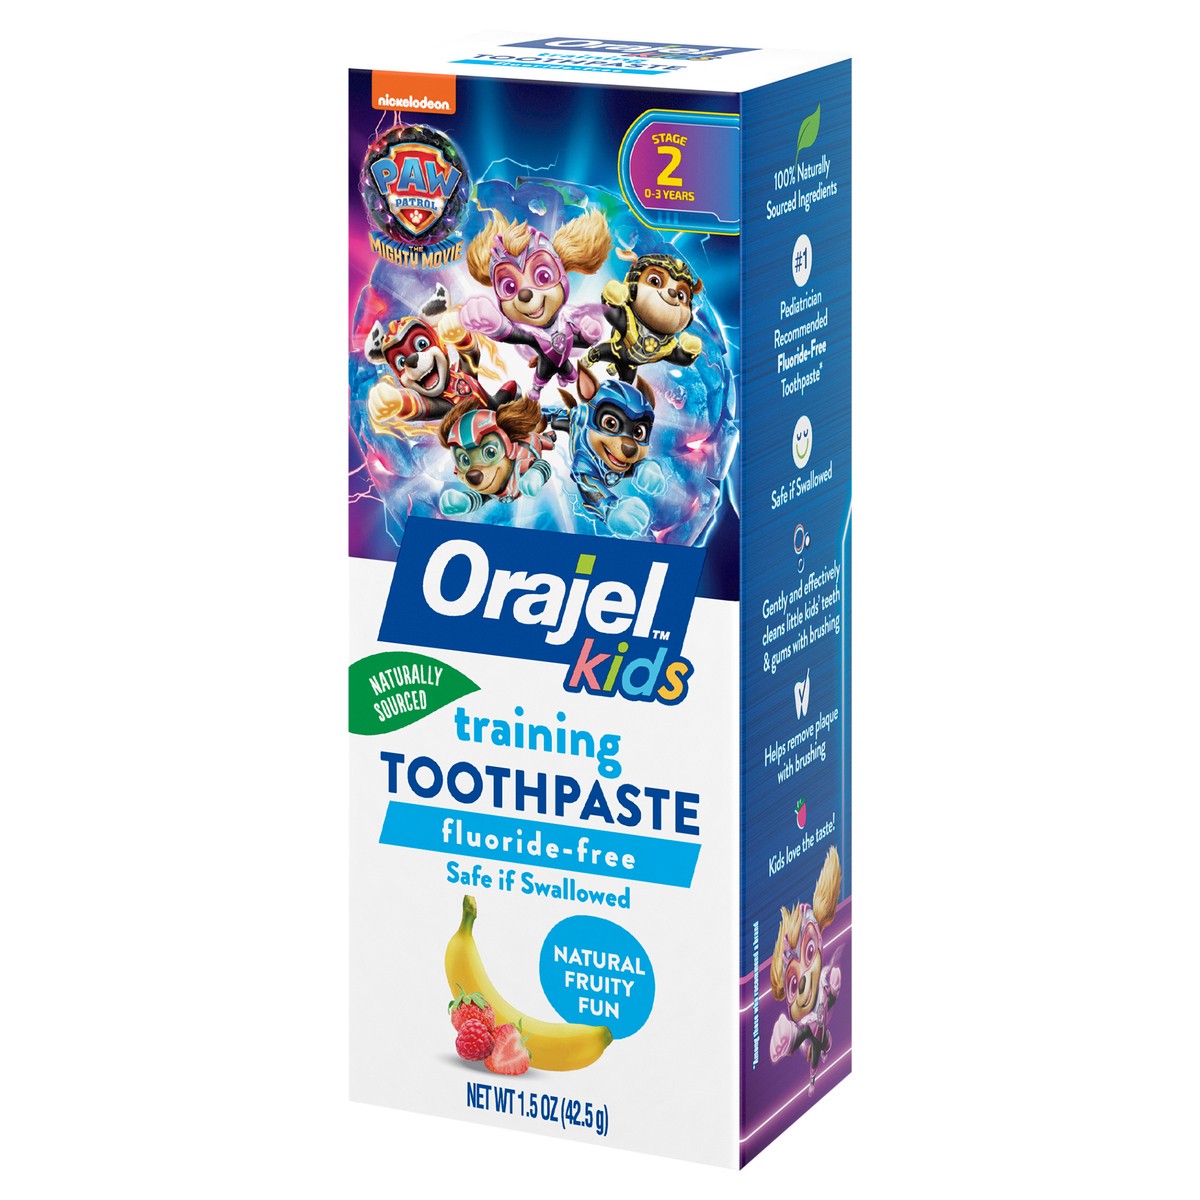 slide 6 of 9, Orajel Paw Patrol Fluoride-Free Training Toothpaste, Fruity Fun Flavor, One 1.5oz Tube: Orajel #1 Pediatrician Recommended Brand for Kids Non-Fluoride Toothpaste, 1.5 oz